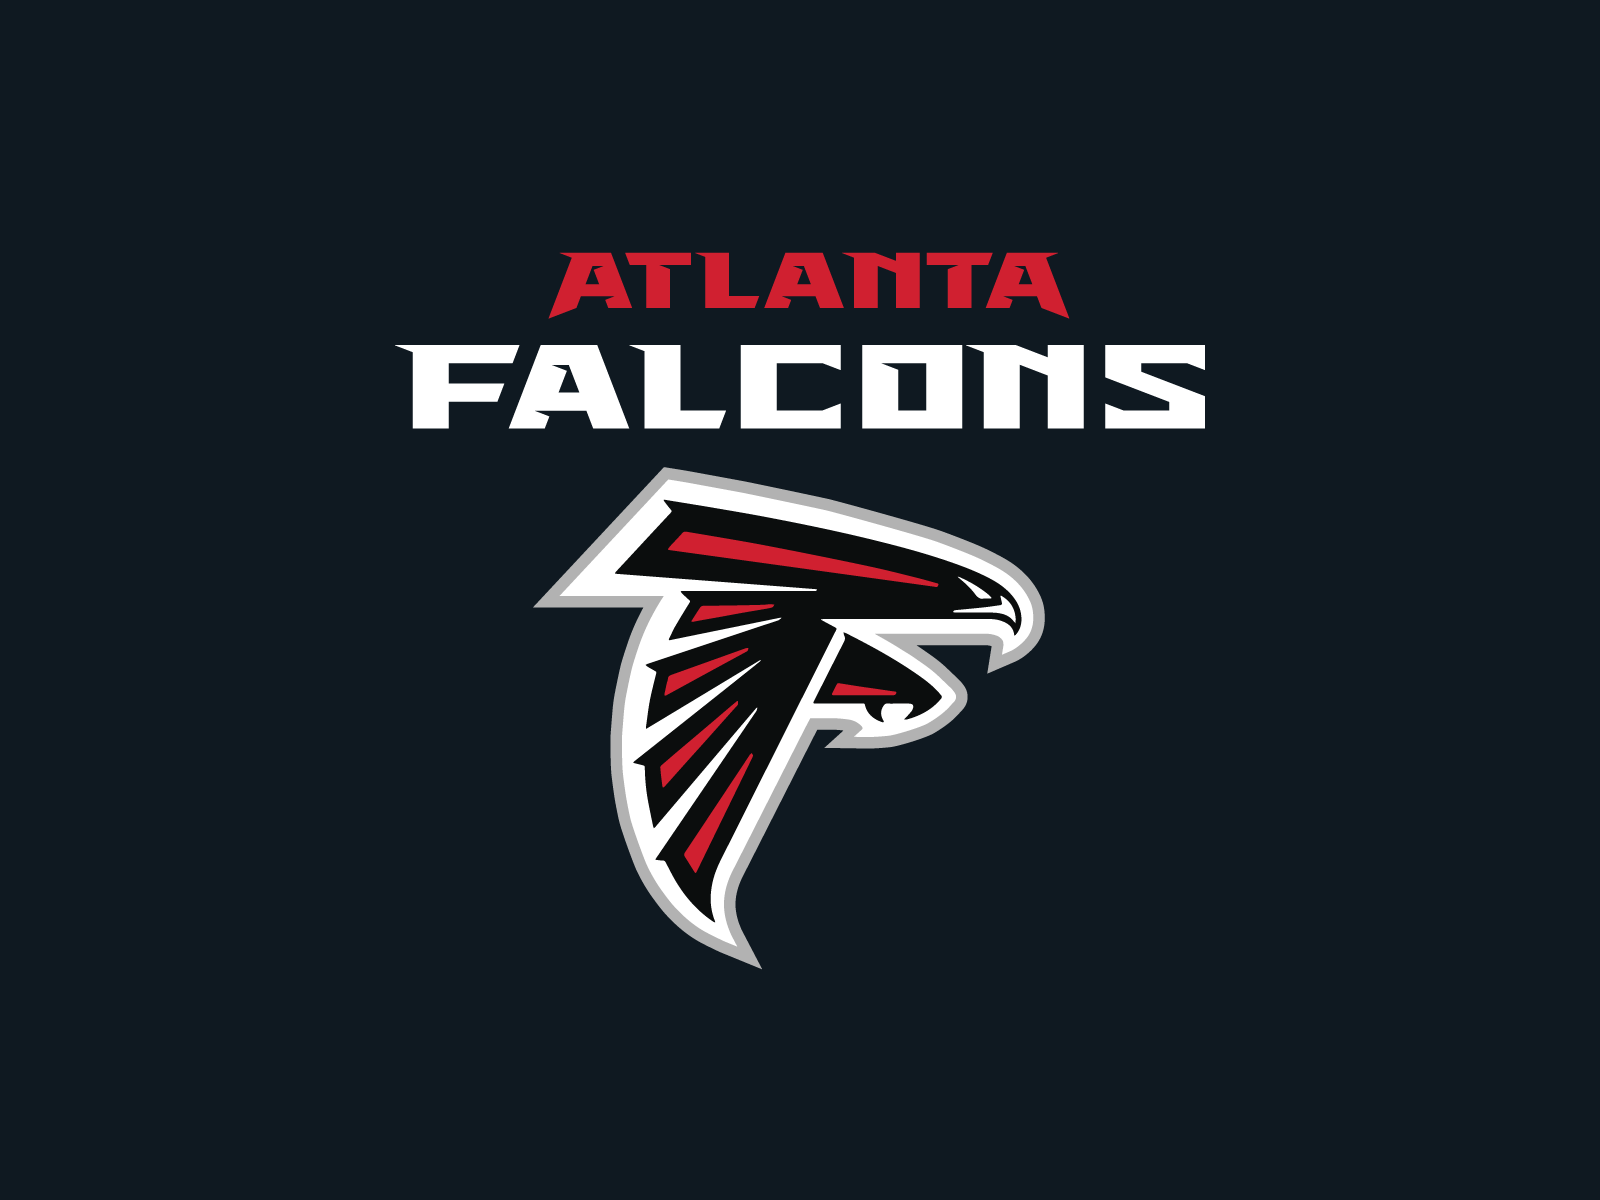 Atlanta Falcons Logo Redux by Christopher Wilson on Dribbble